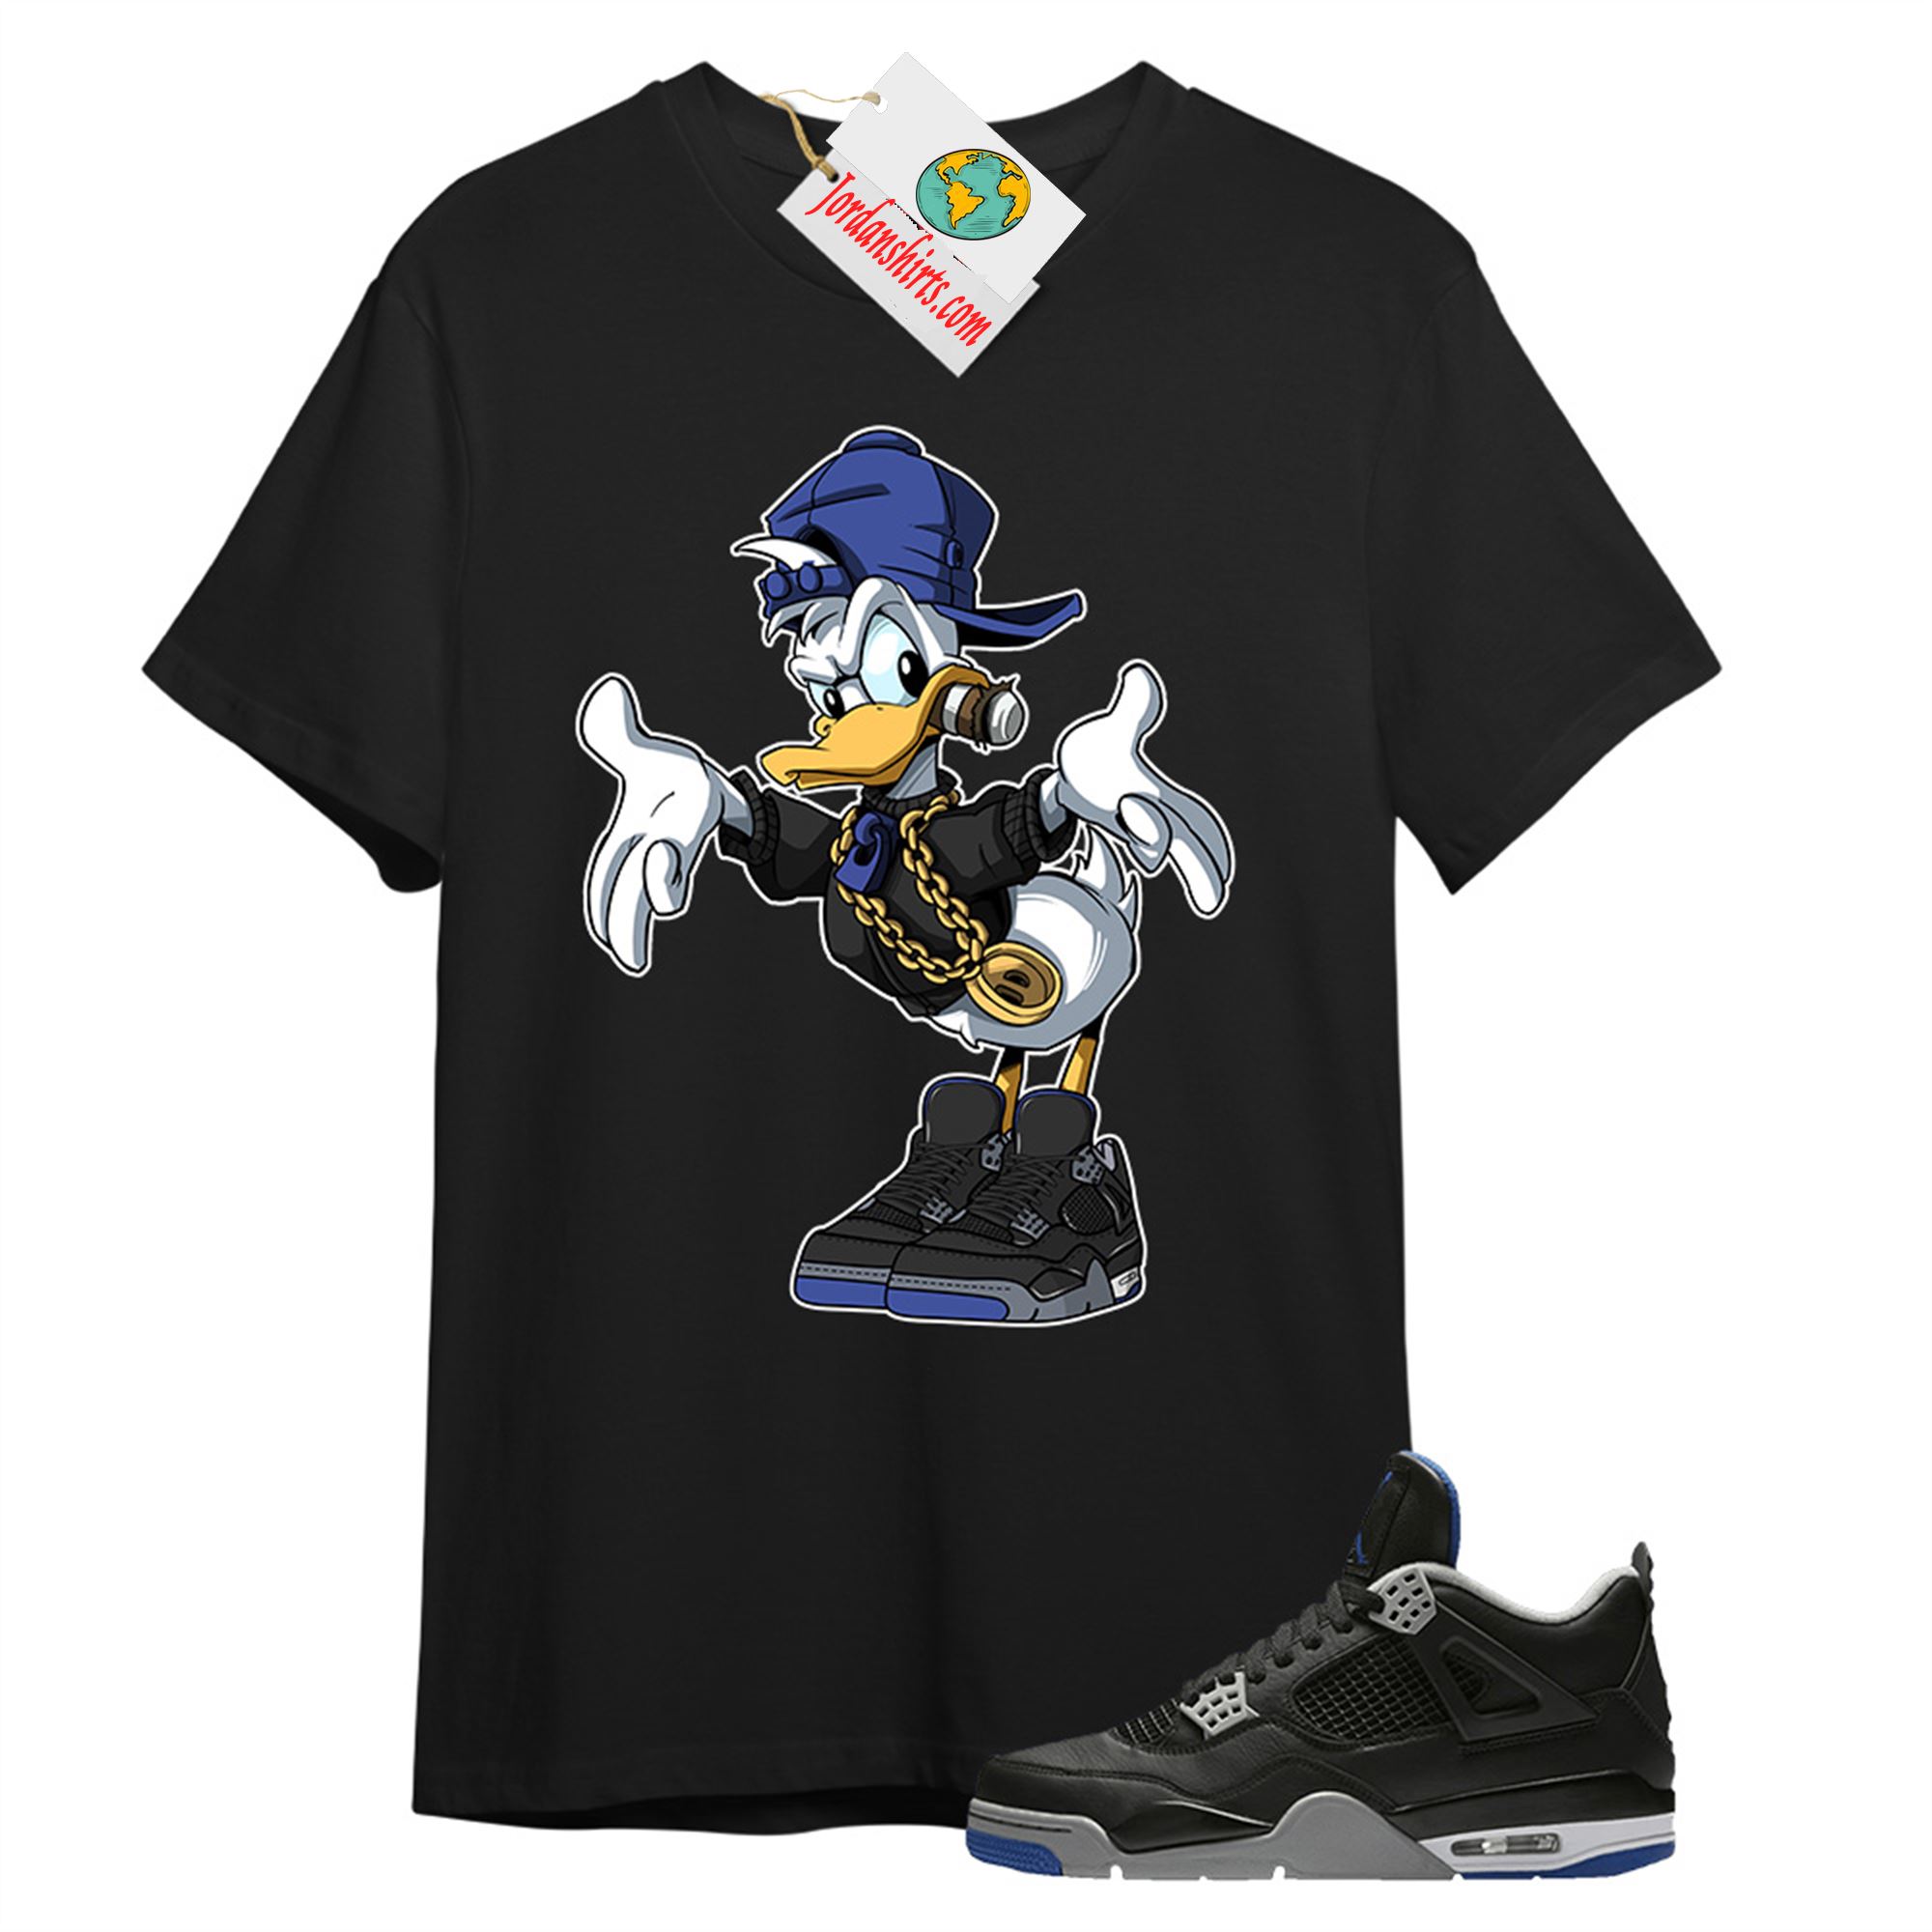 Jordan 4 Shirt, Donald Duck Black T-shirt Air Jordan 4 Motorsport Alternate 4s Size Up To 5xl